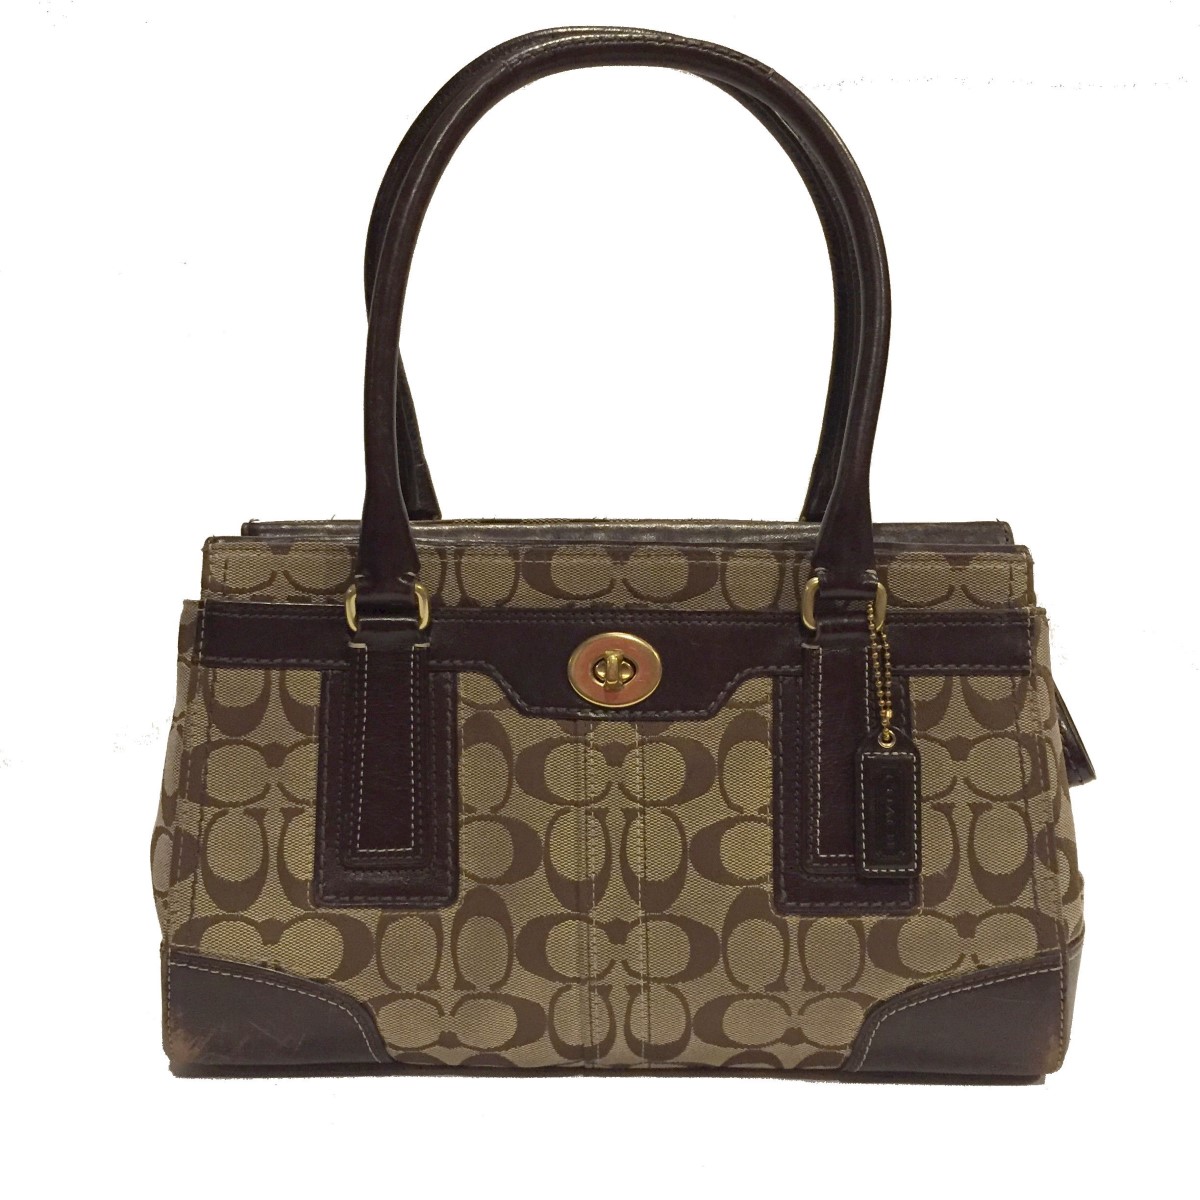 Mon Oct 31 – Coach Hampton Signature Handbag – $99